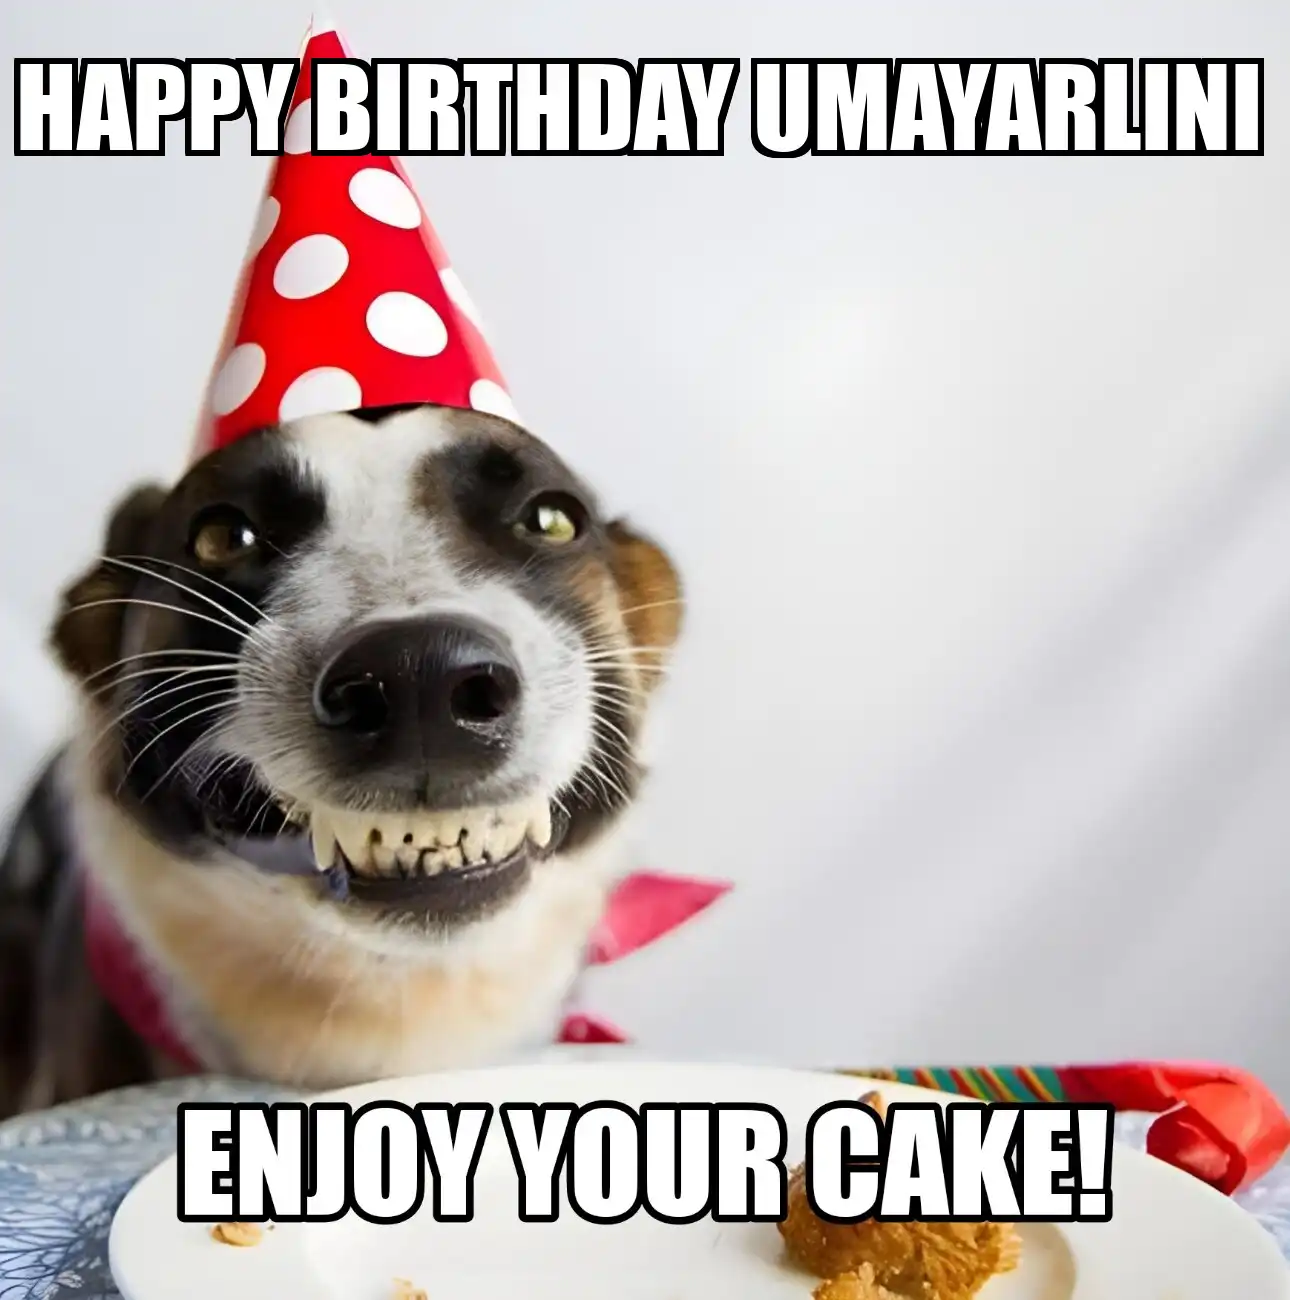 Happy Birthday Umayarlini Enjoy Your Cake Dog Meme